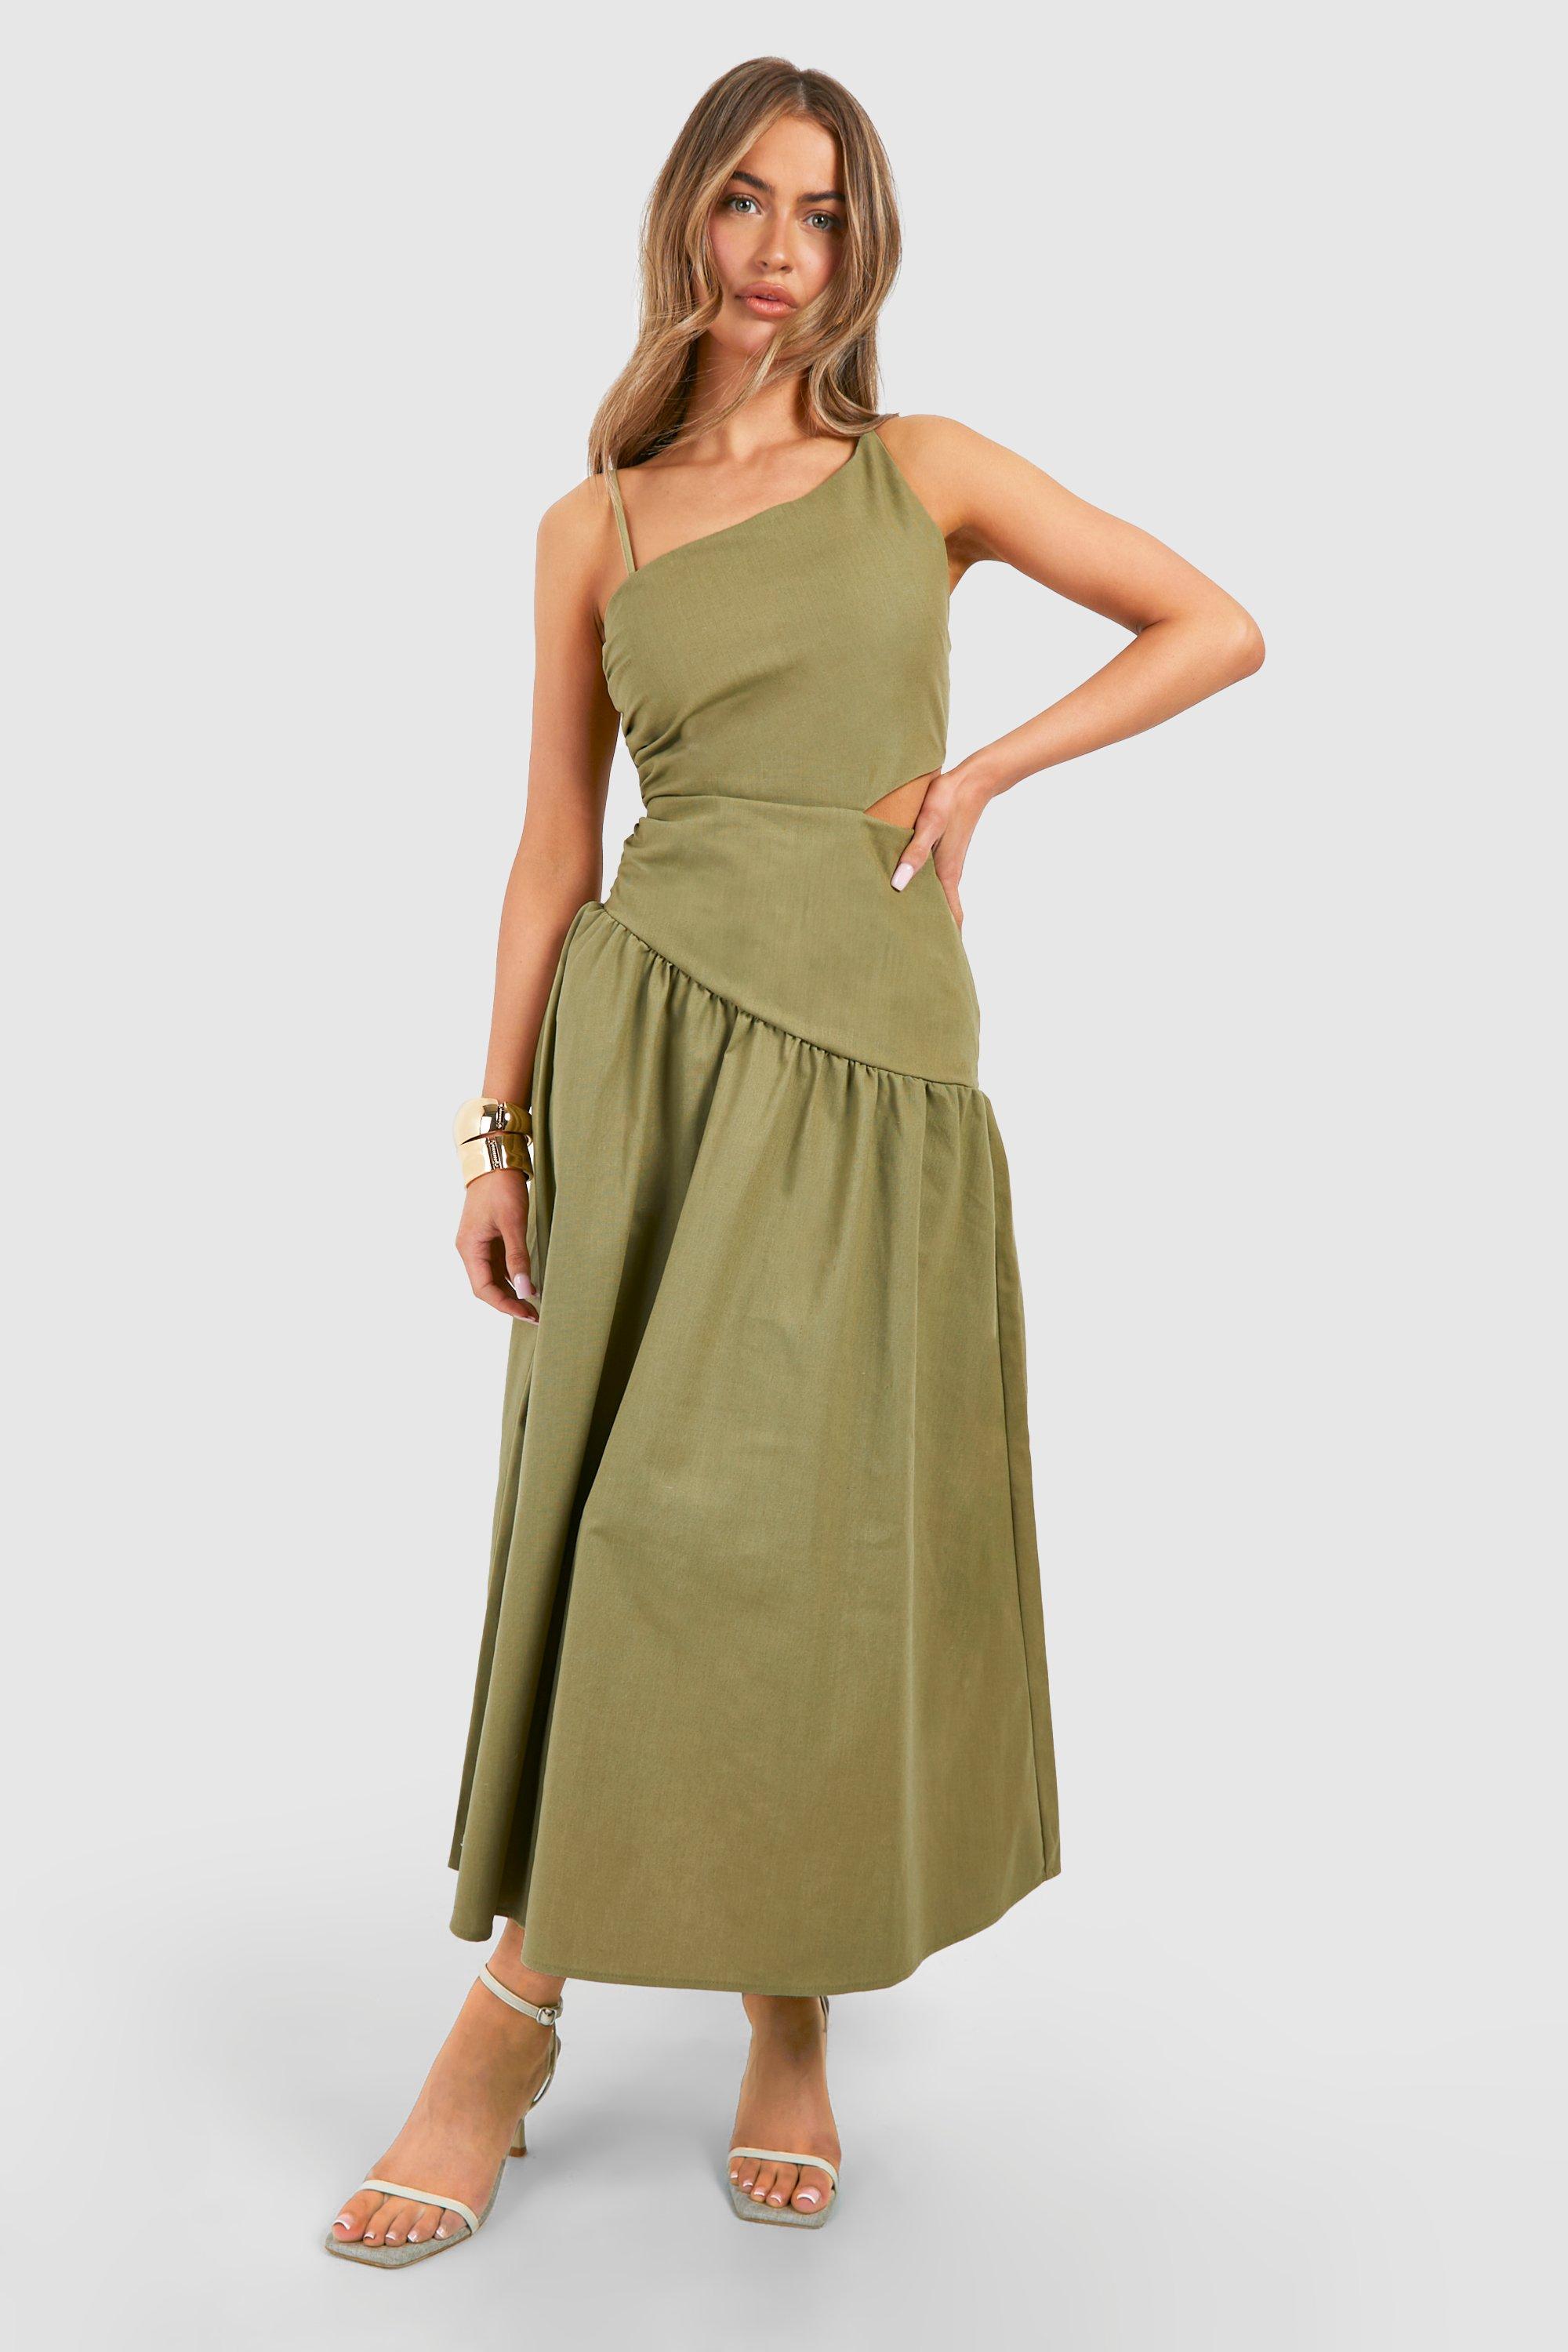 Boohoo Linen Cut Out Asymmetric Midaxi Dress, Olive